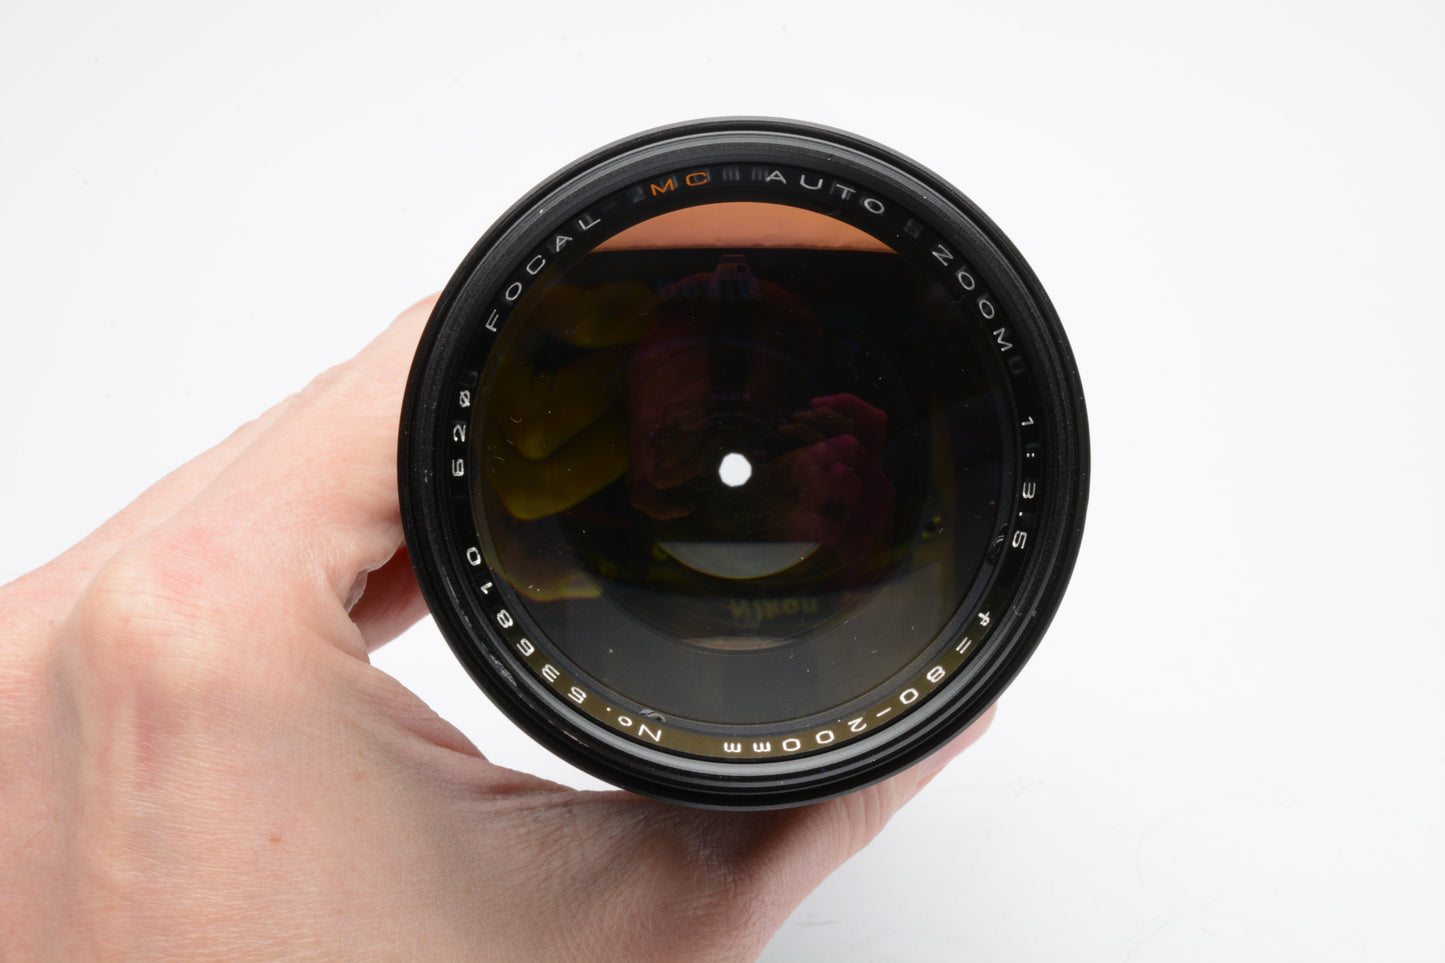 Focal MC 80-200mm f3.5 zoom lens, caps, Minolta MD mount